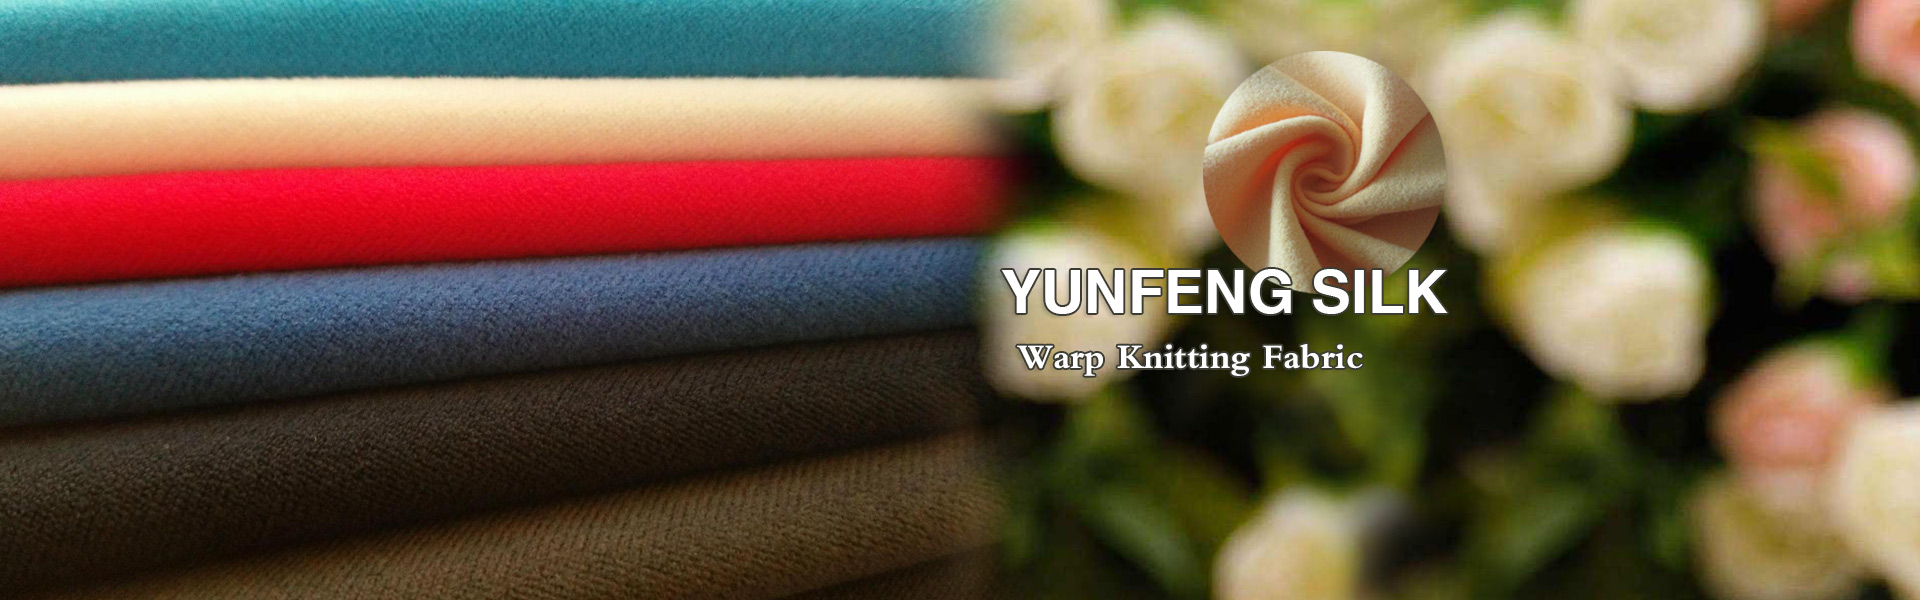 Warp Knitting Fabric